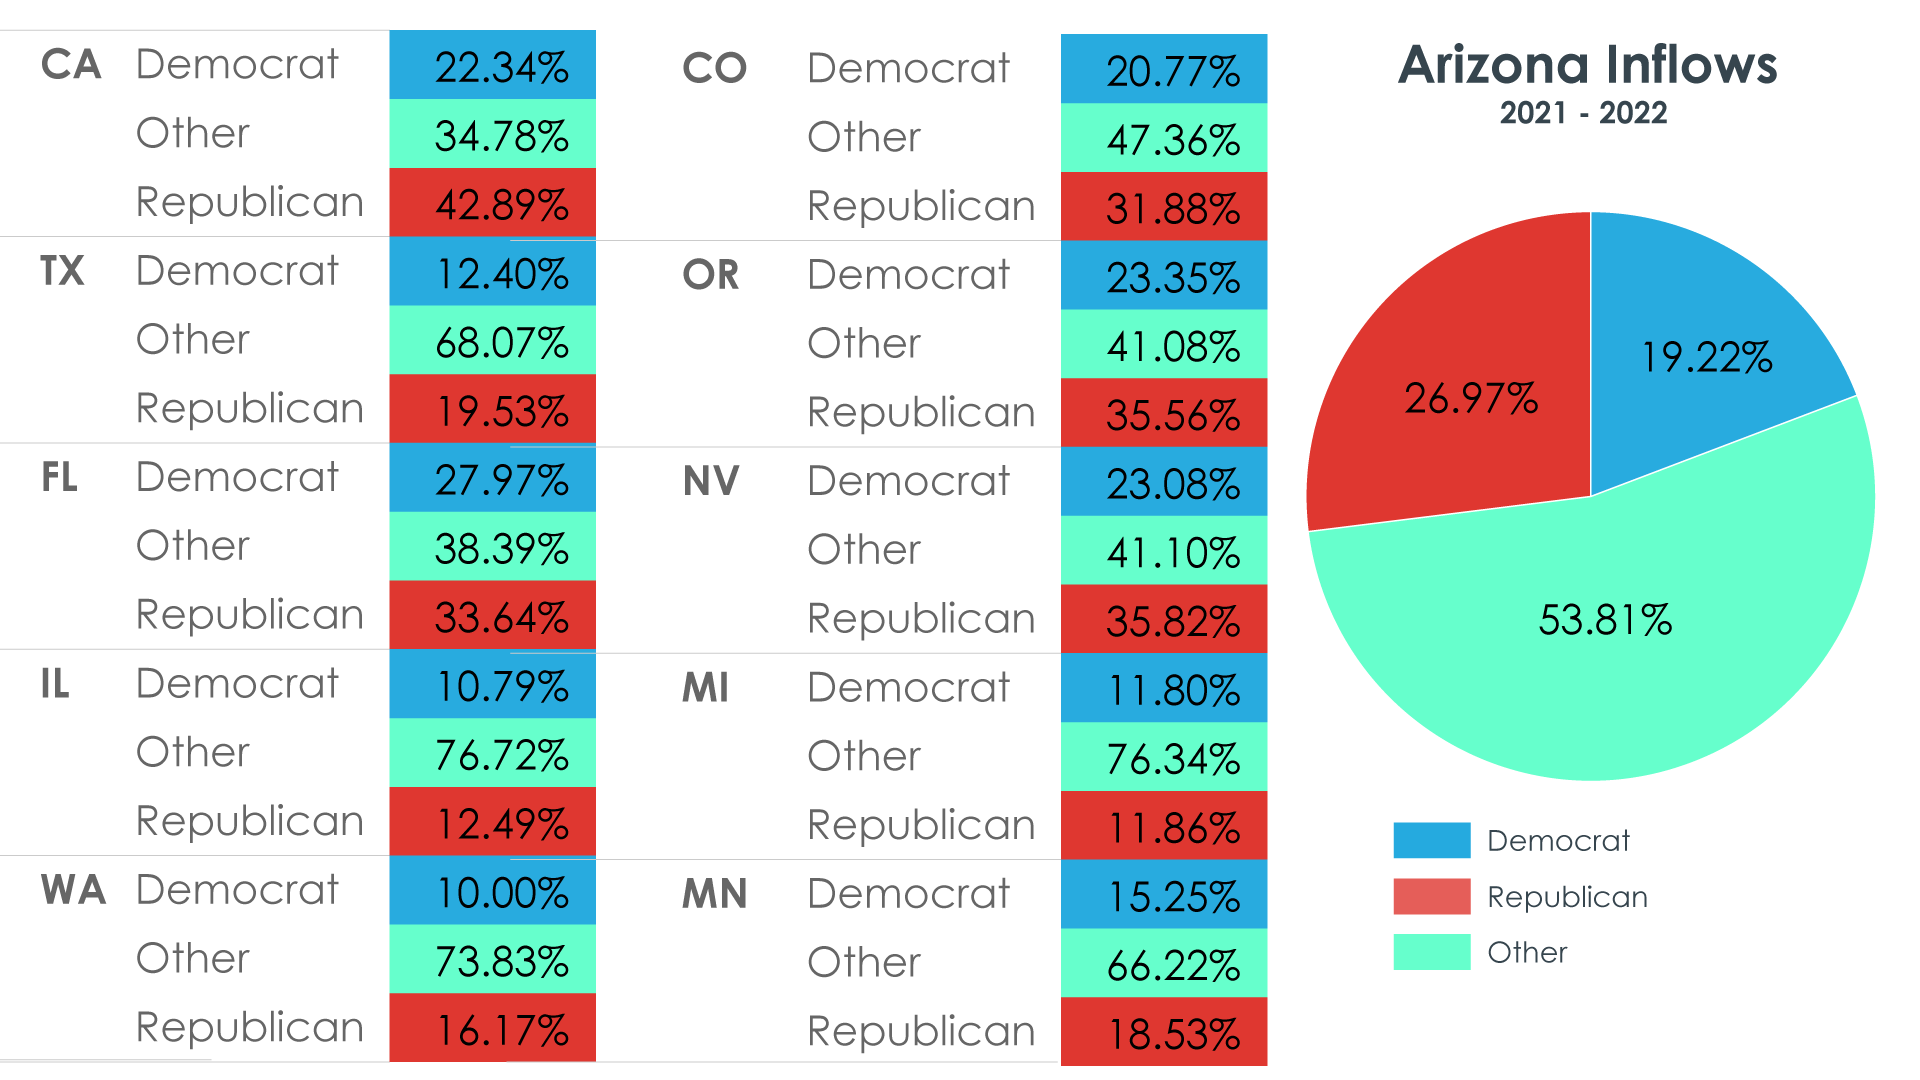 Population data and Arizona inflows